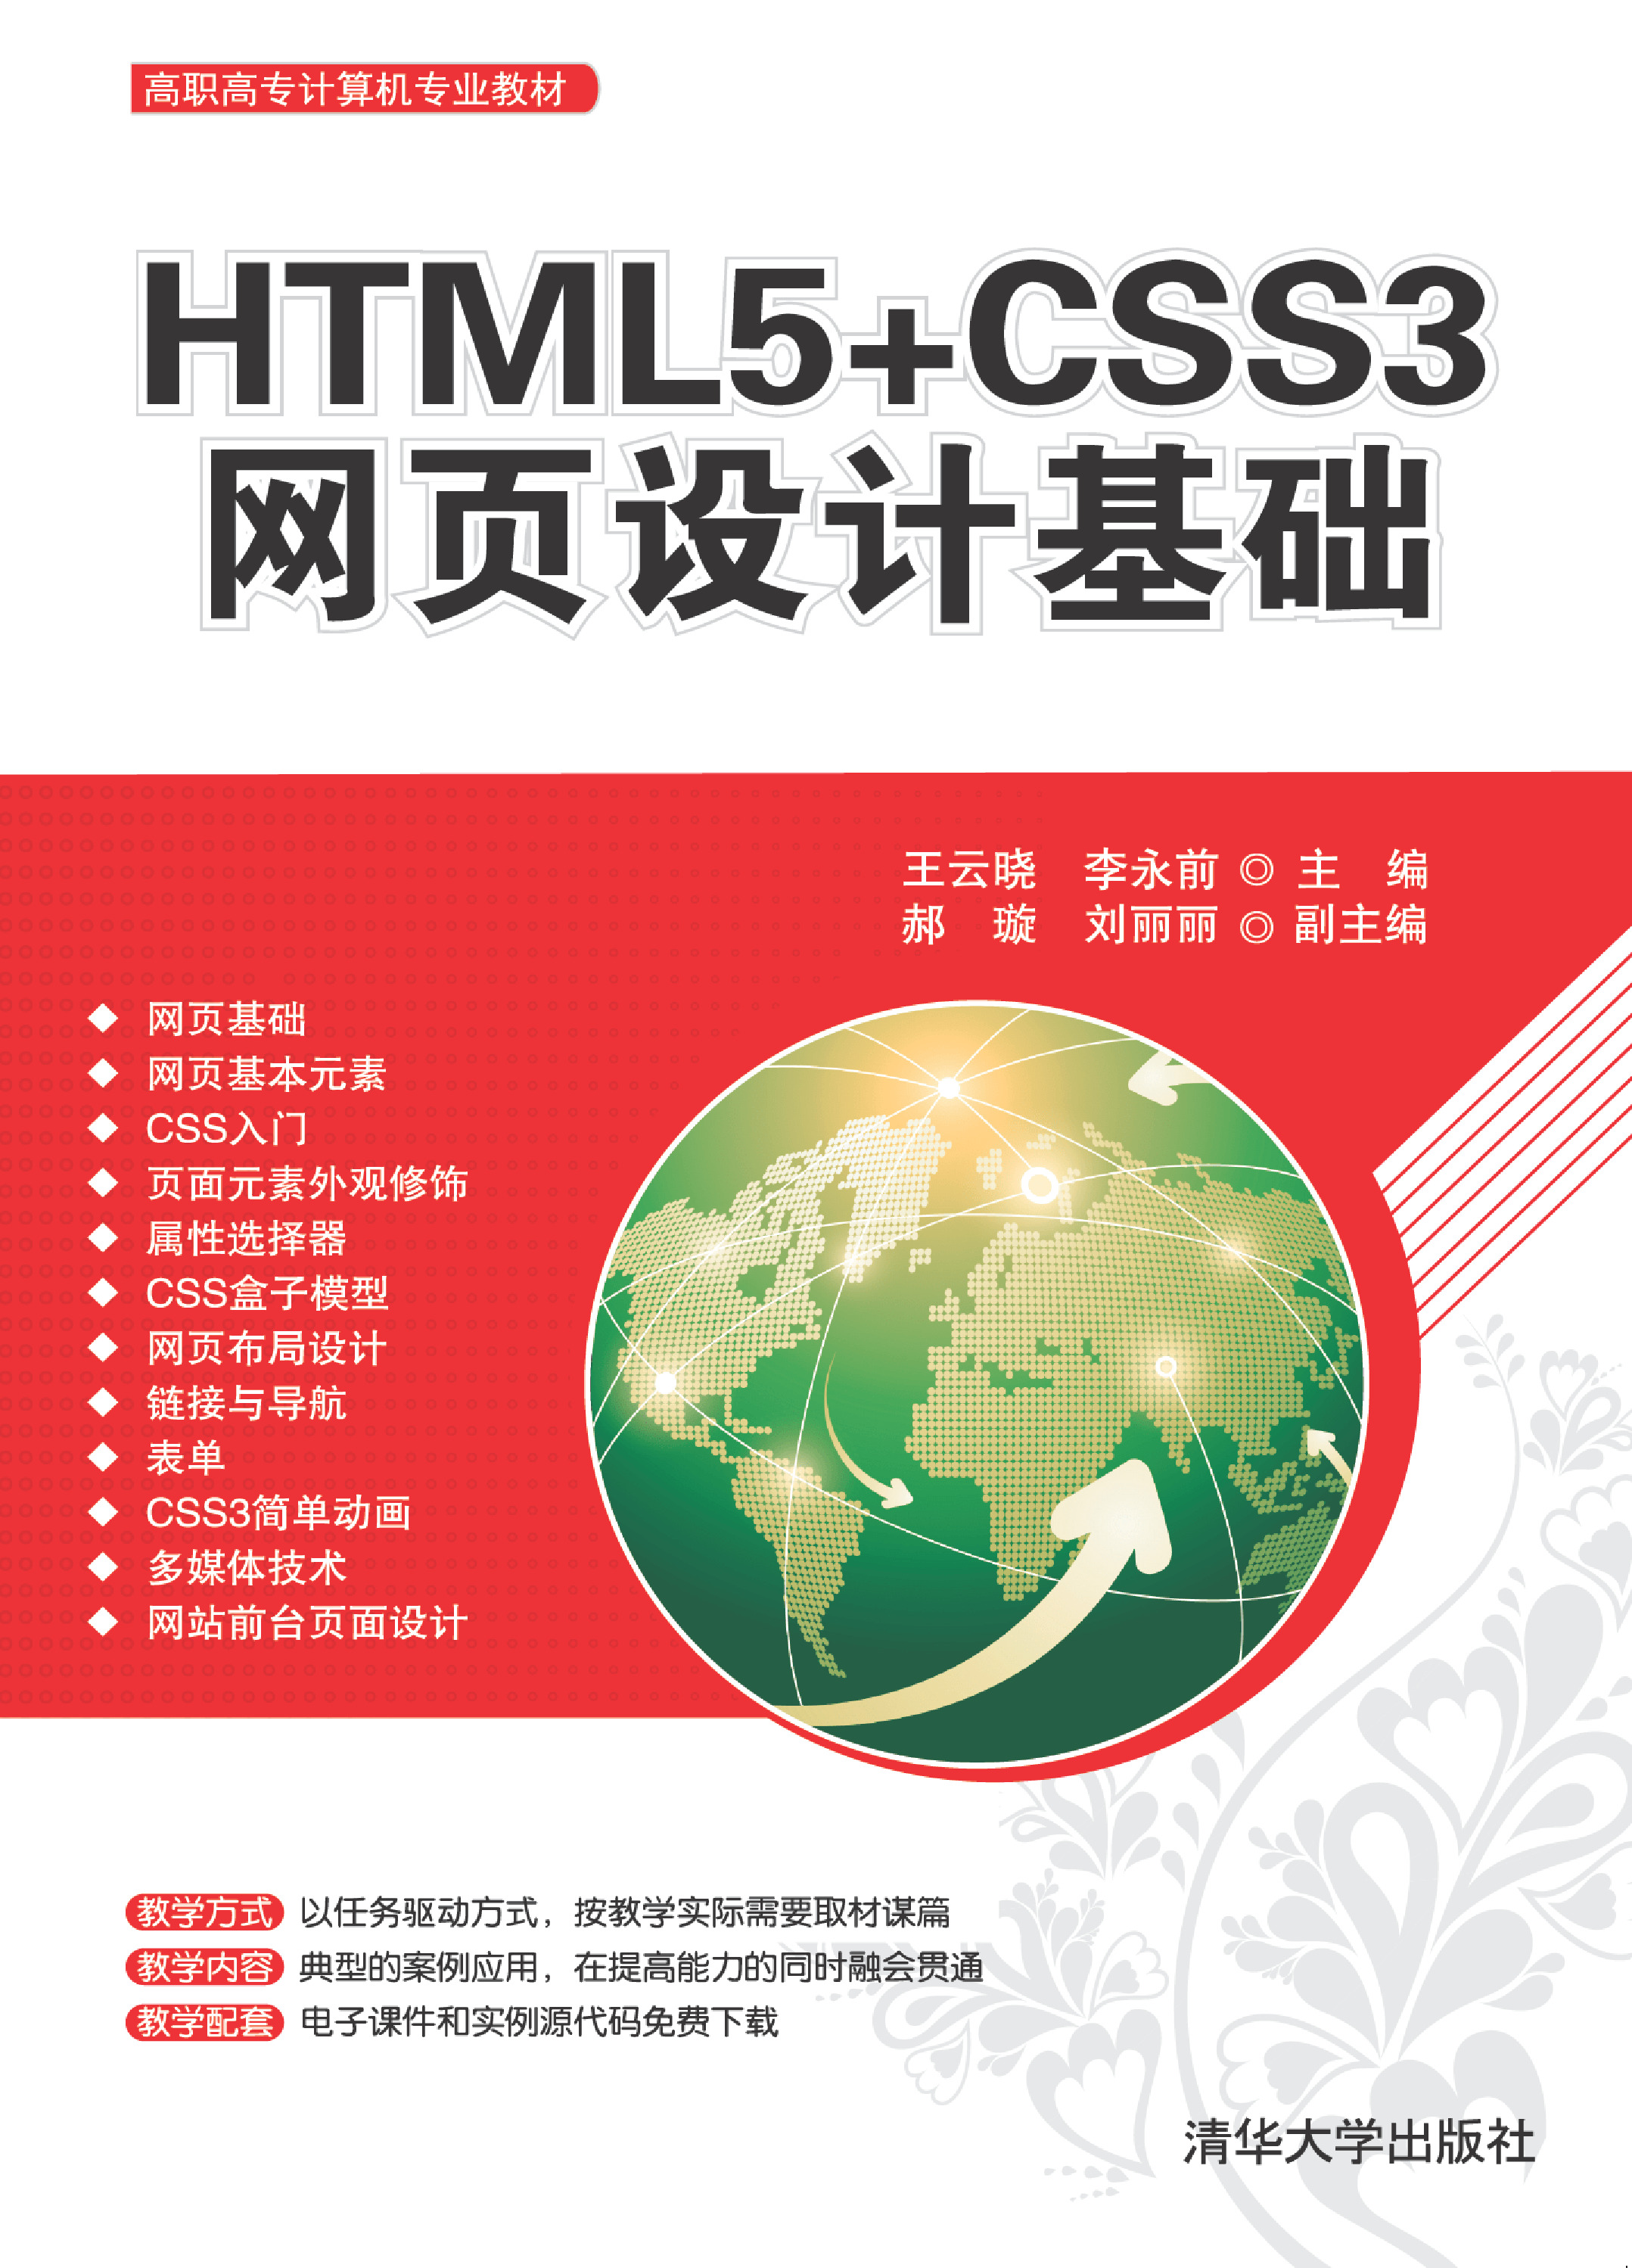 HTML5 CSS3网页设计基础